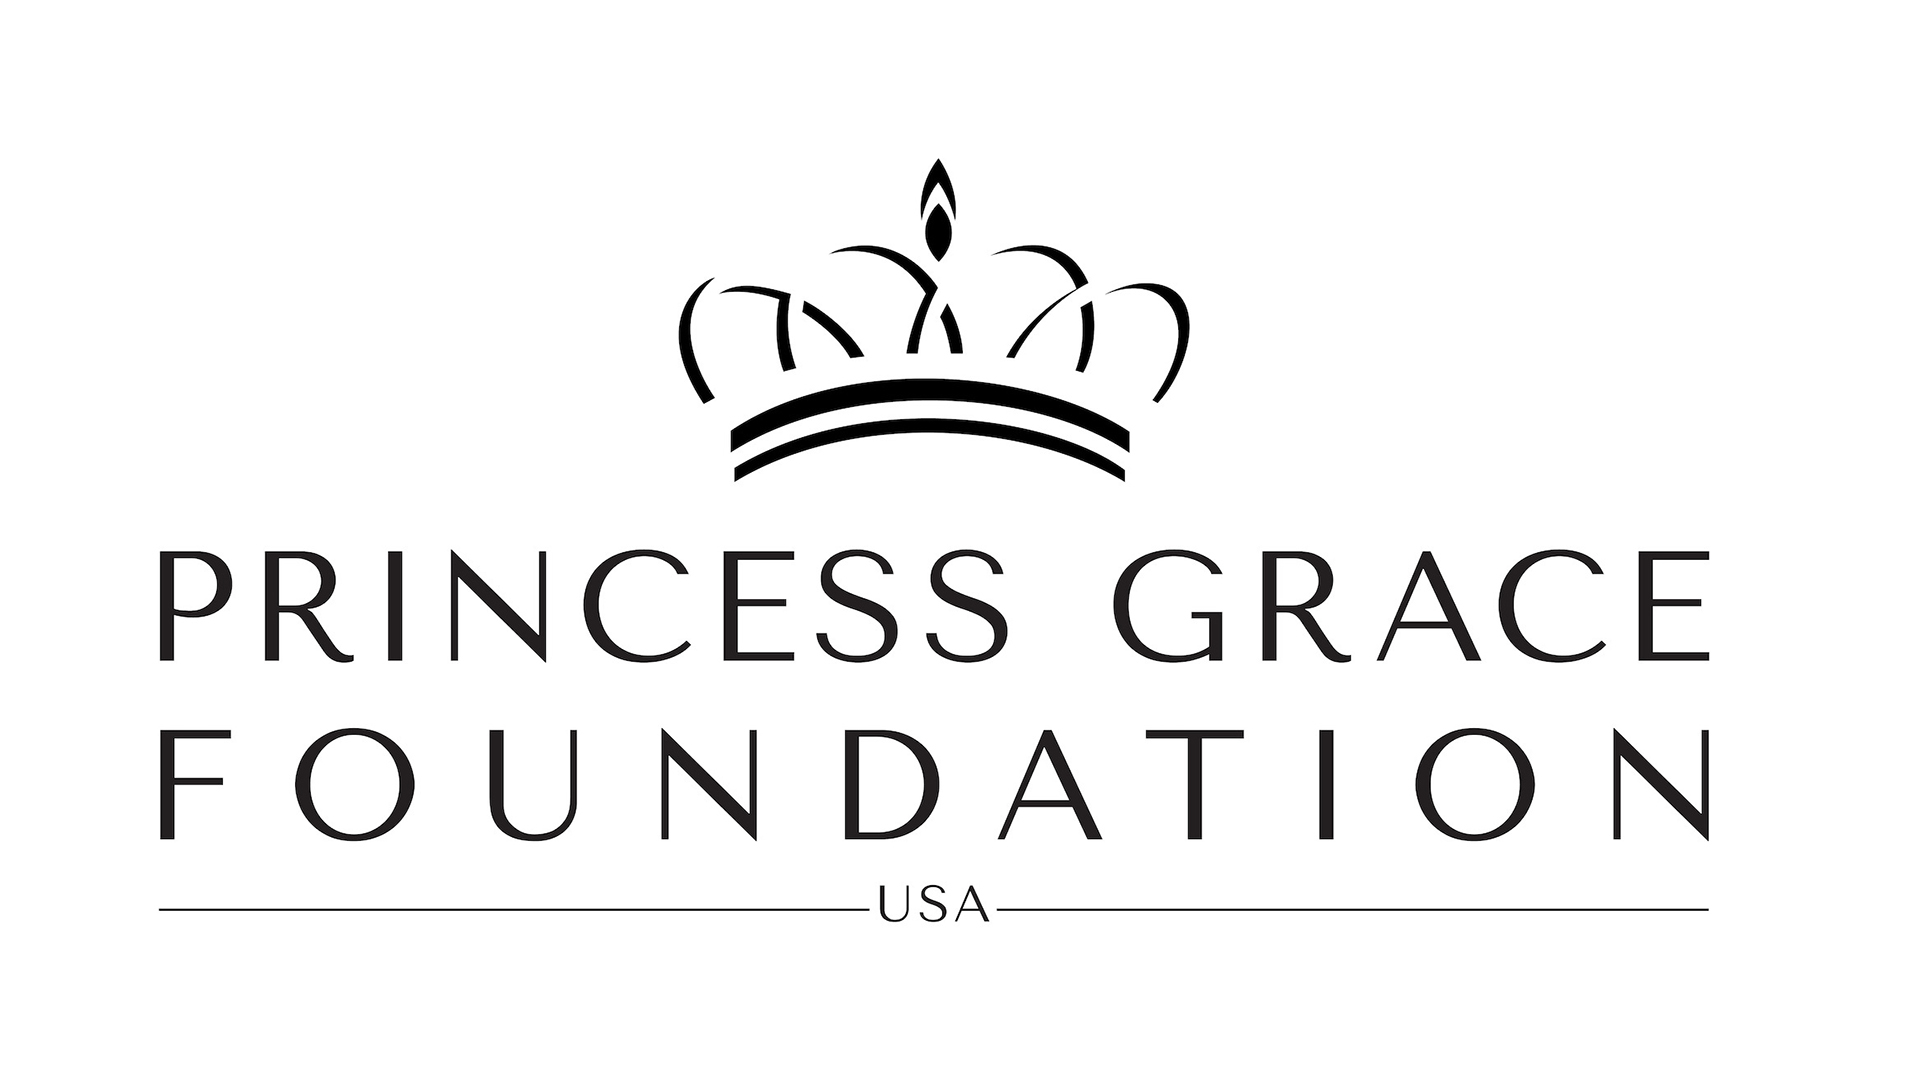 Princess Grace Foundation